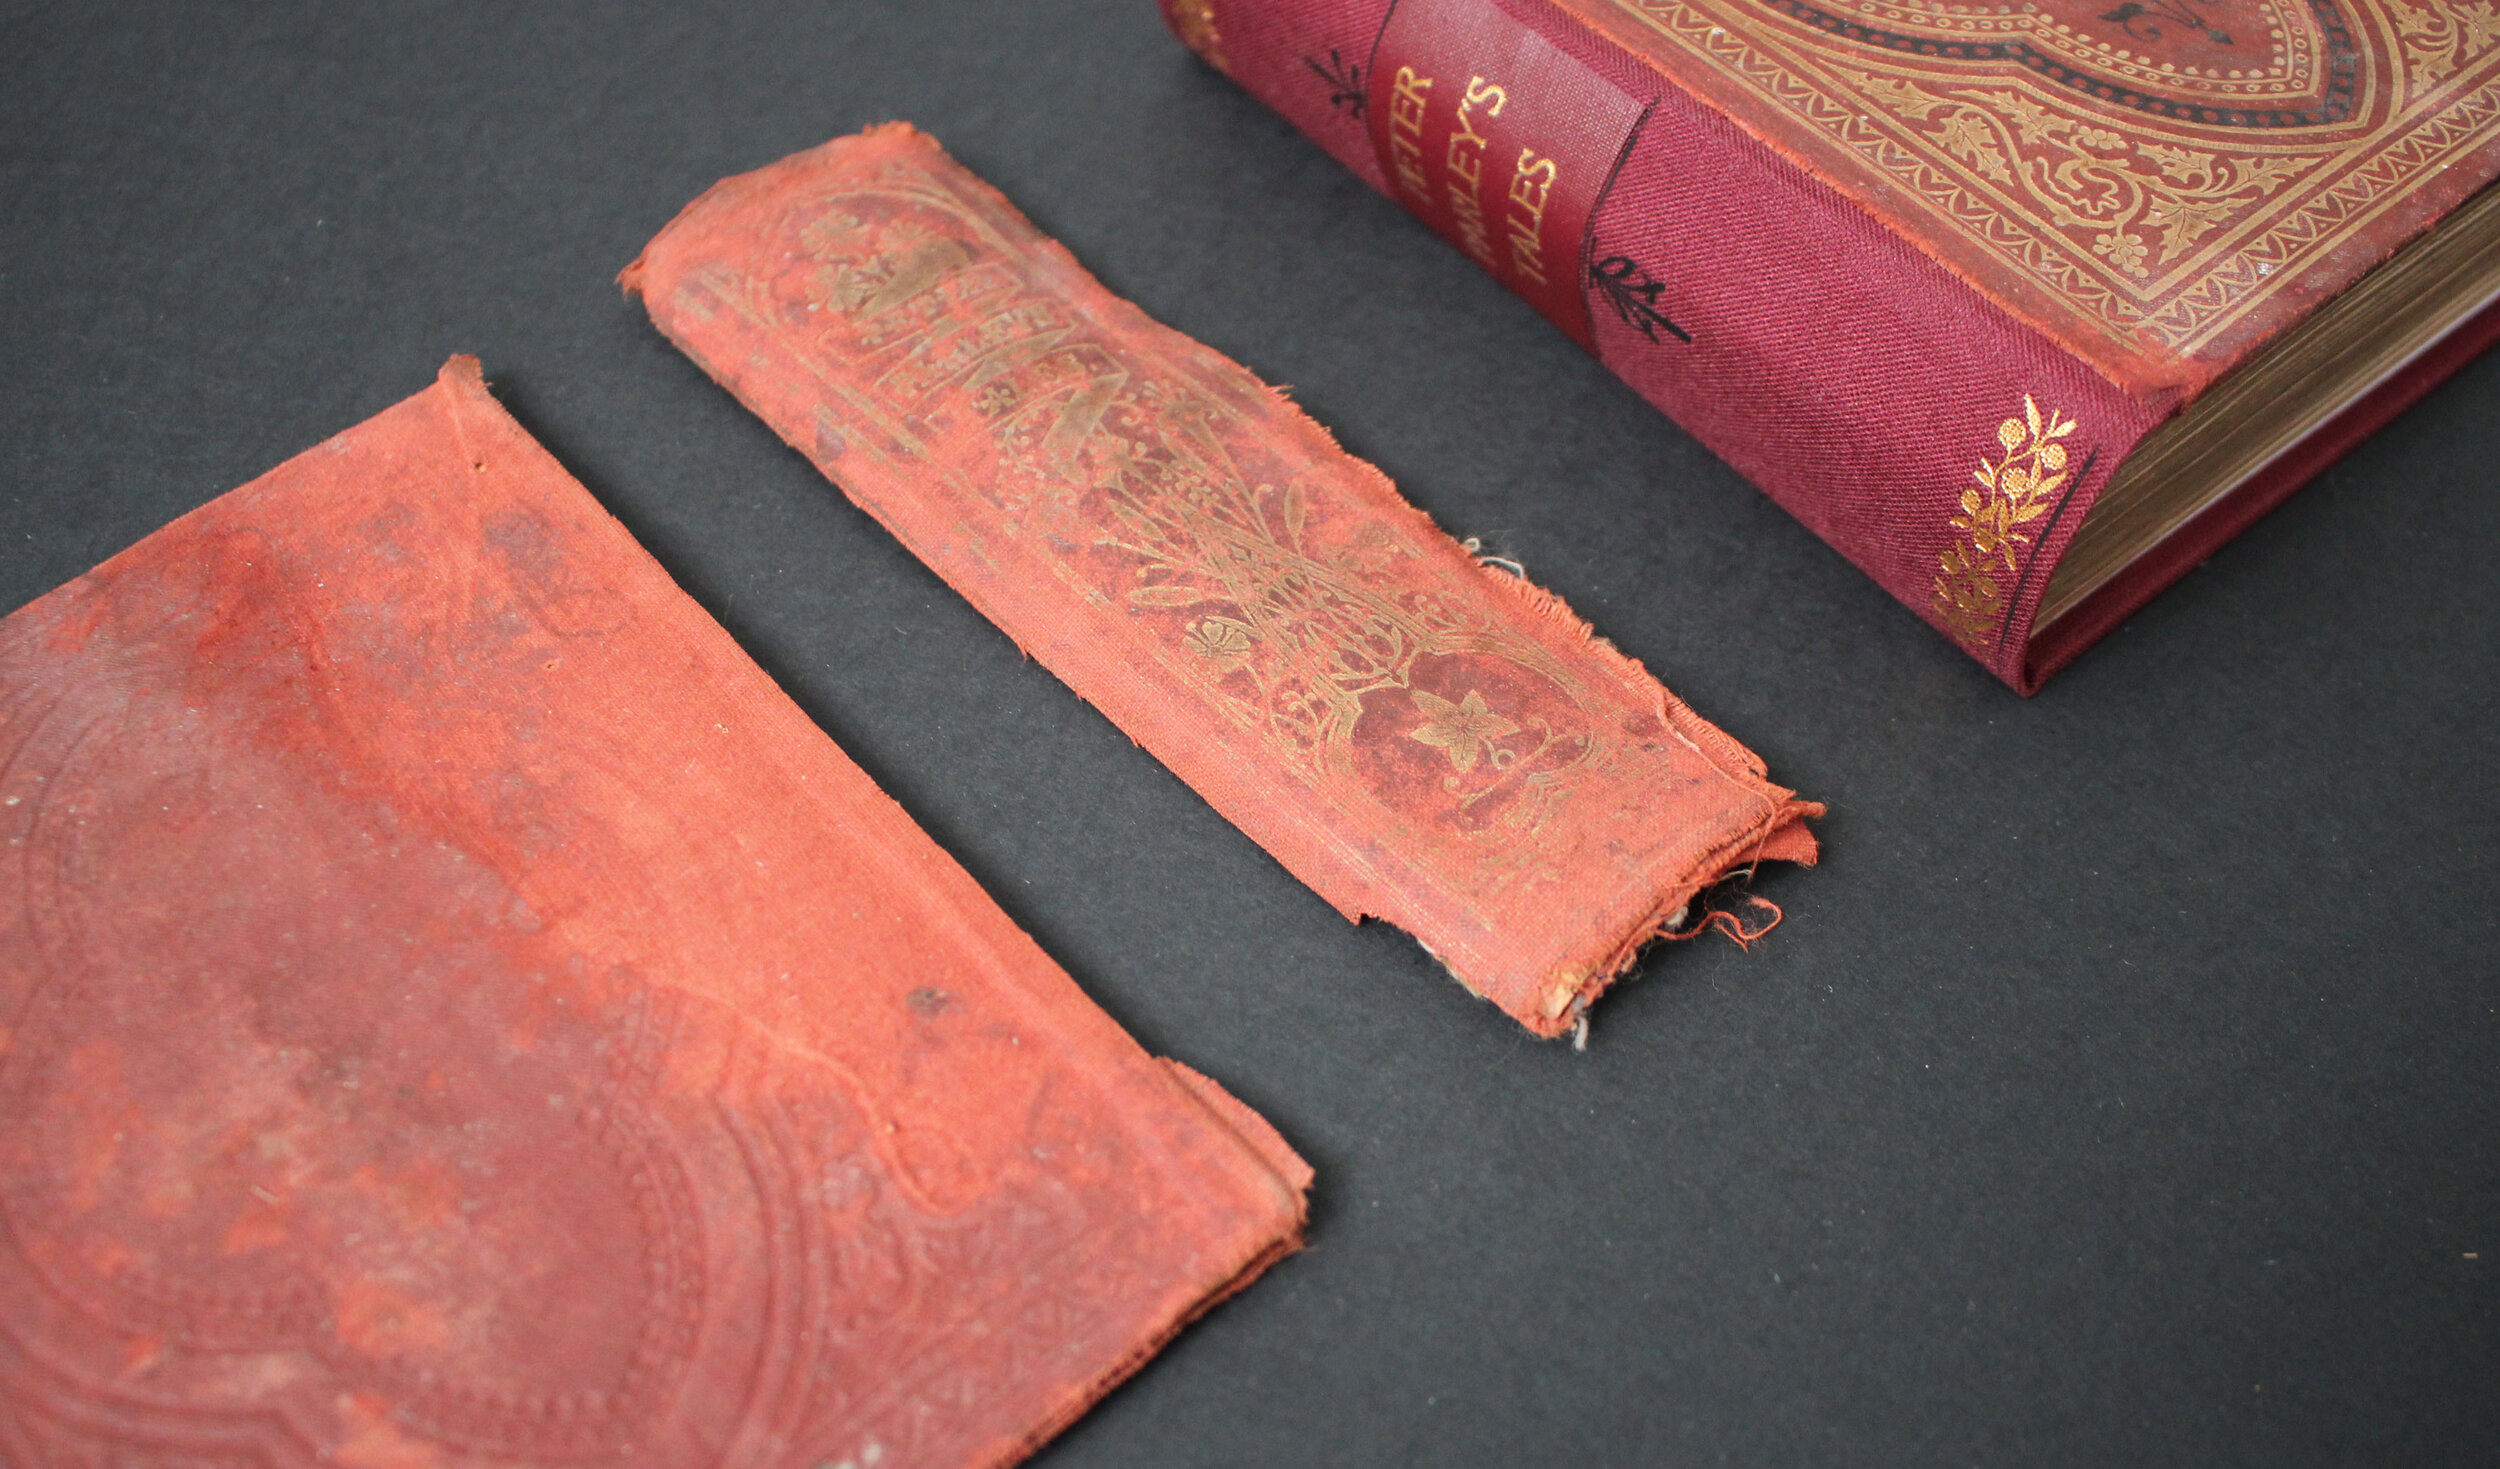  bookbinding bookbinder book repair restoration juju books glasgow scotland 